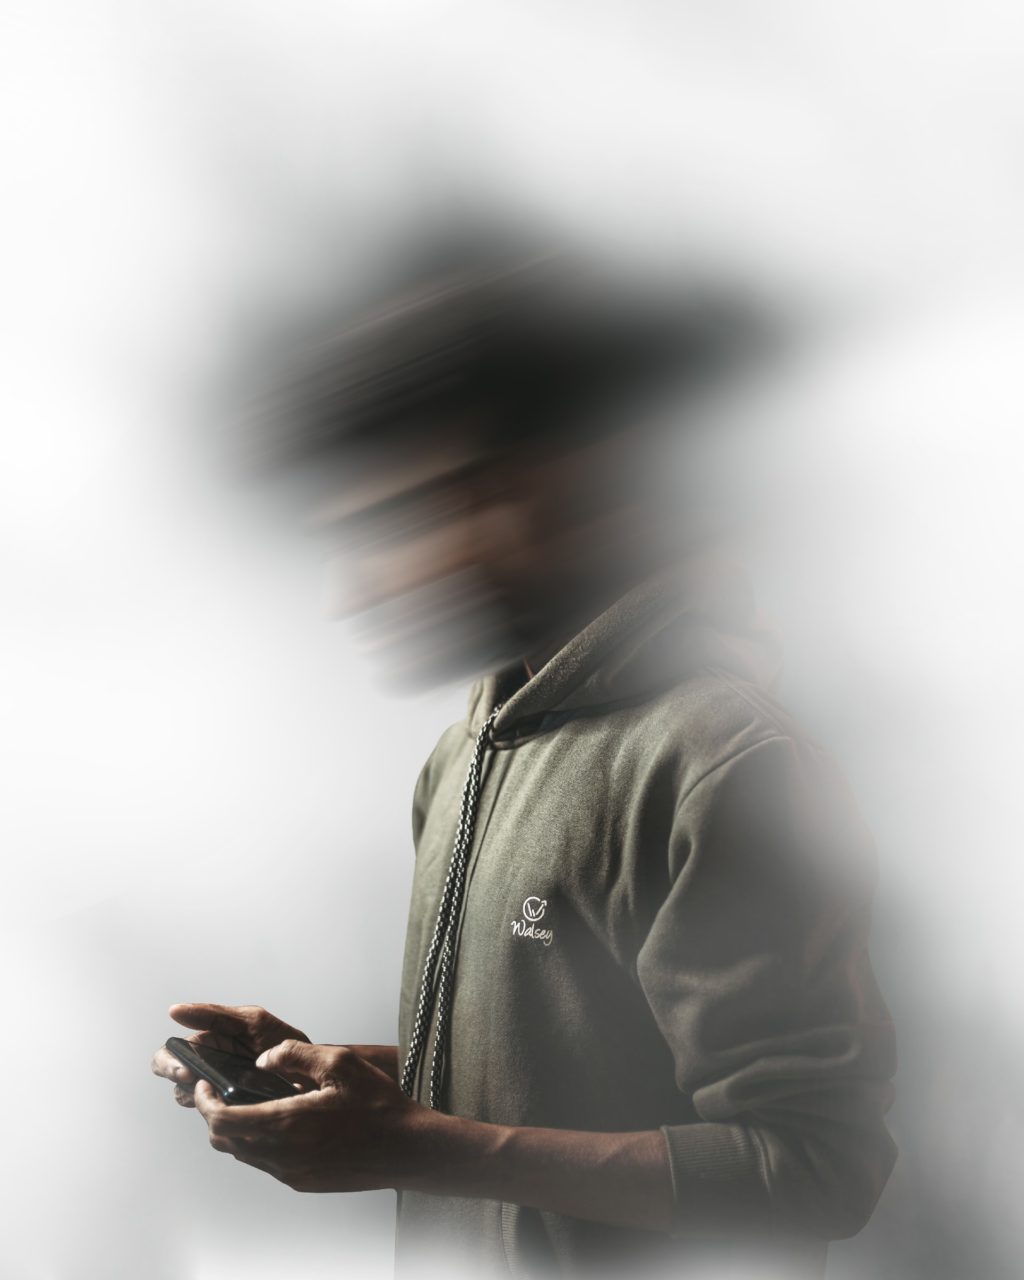 blurry self-portrait